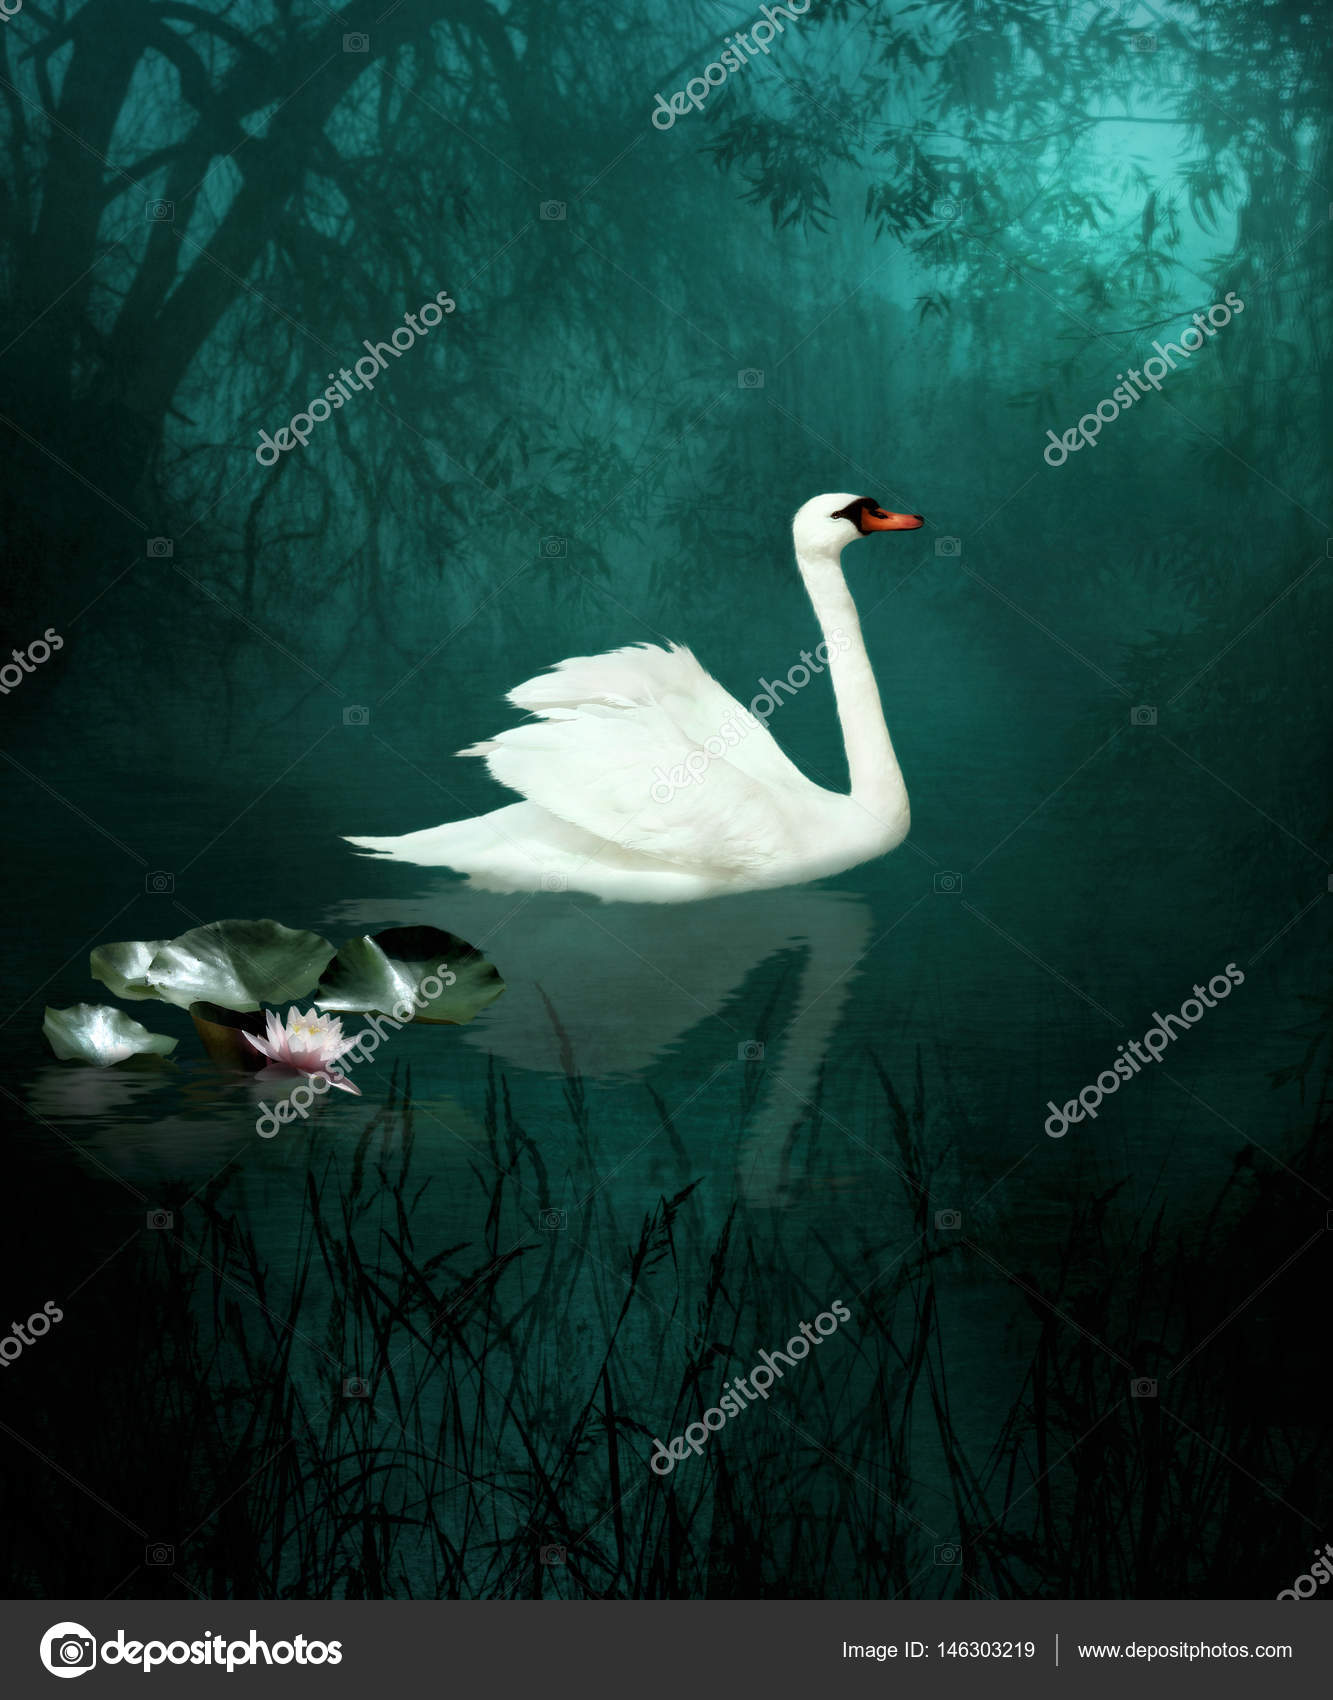 White swan at night — Stock Photo © Margo1956 #146303219